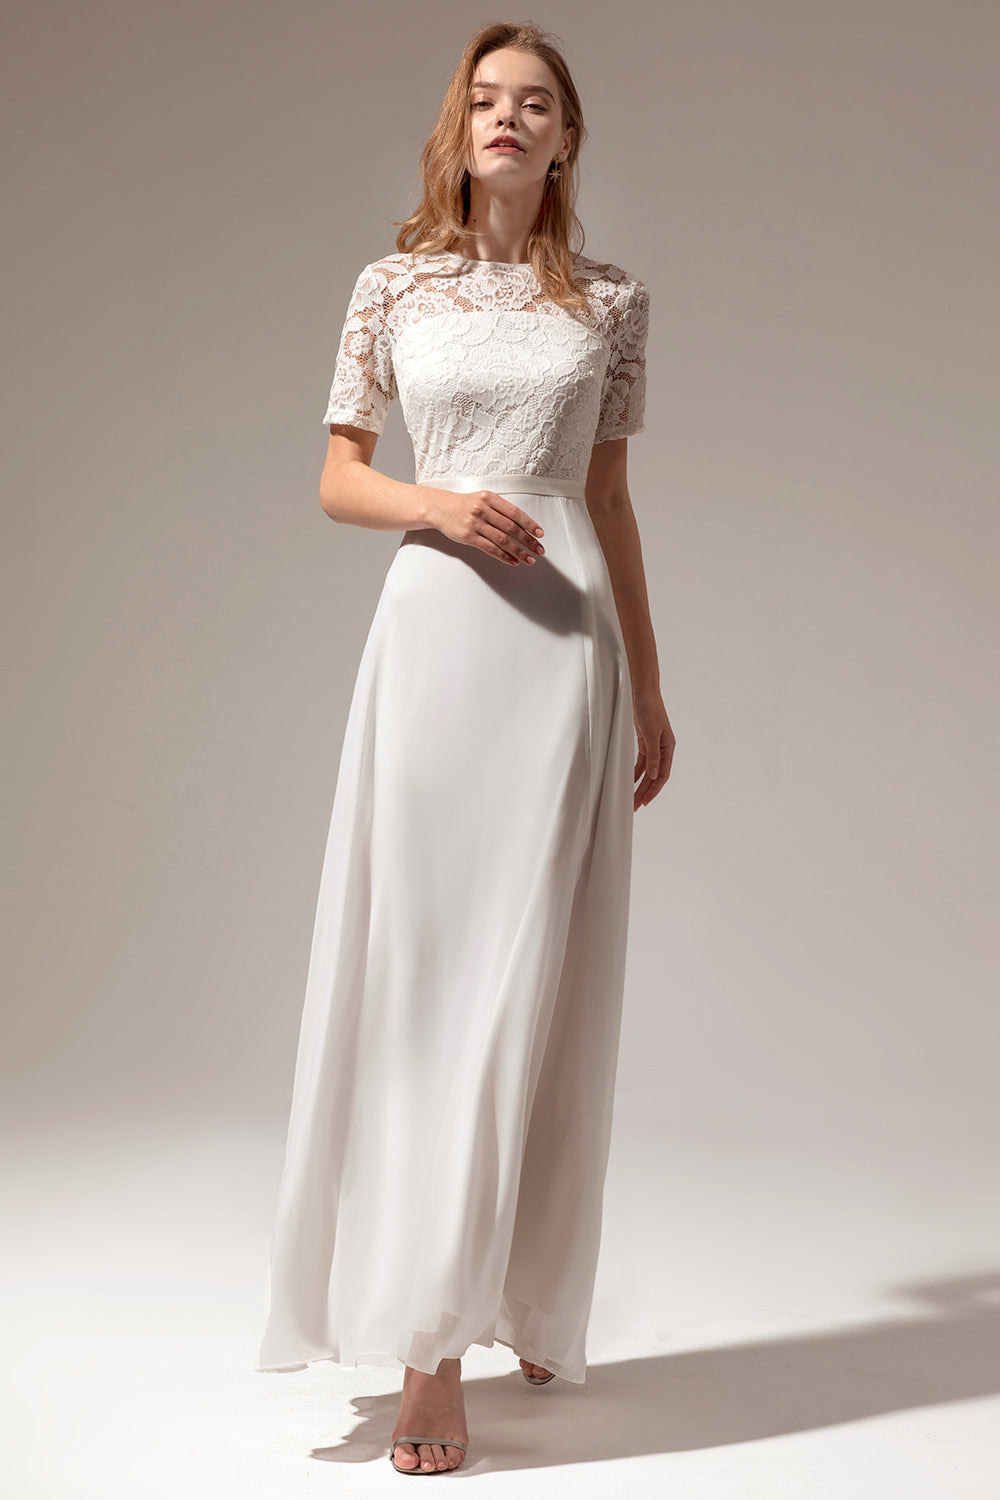 Zapaka Elegant White A-Line Long Chiffon Short Sleeves Wedding